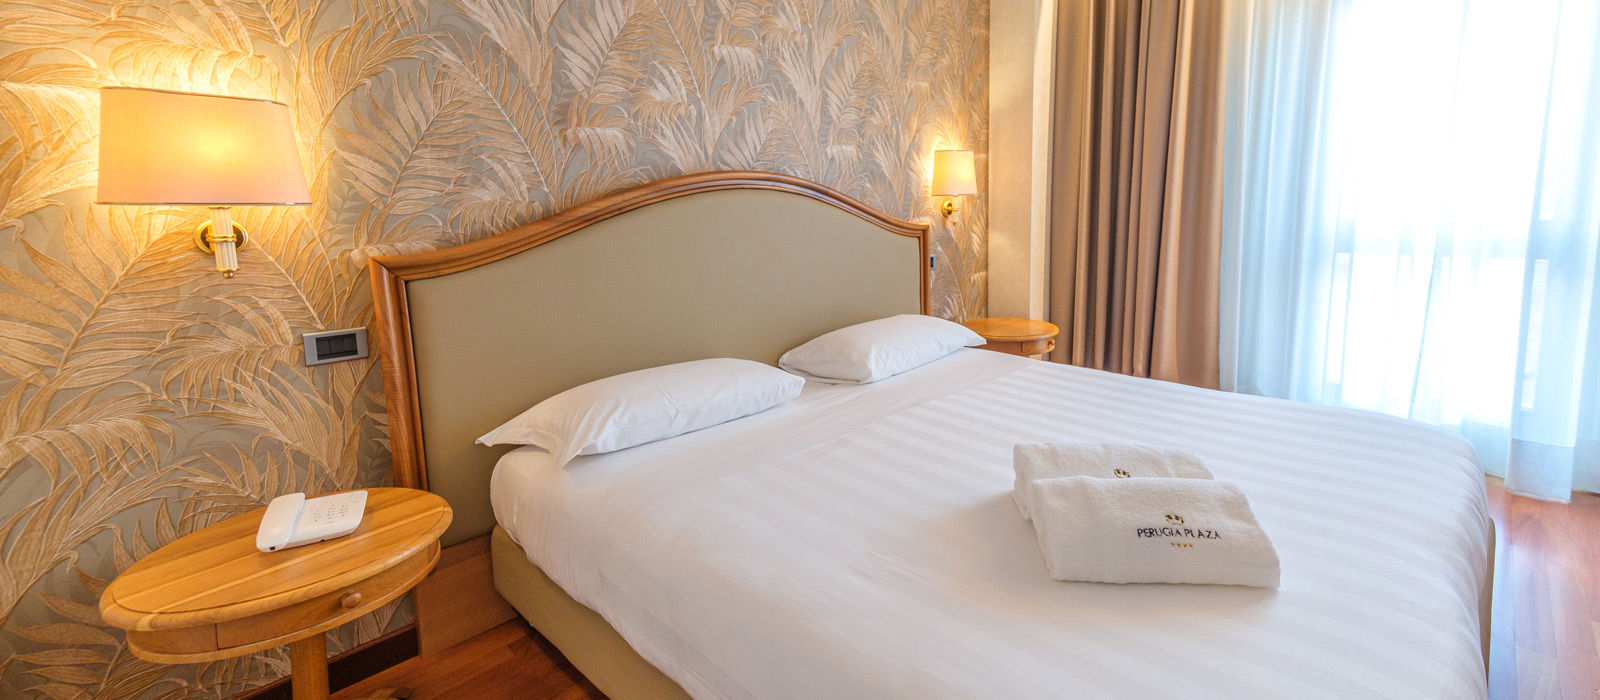 Perugia Plaza Hotel - Executive Rooms 1